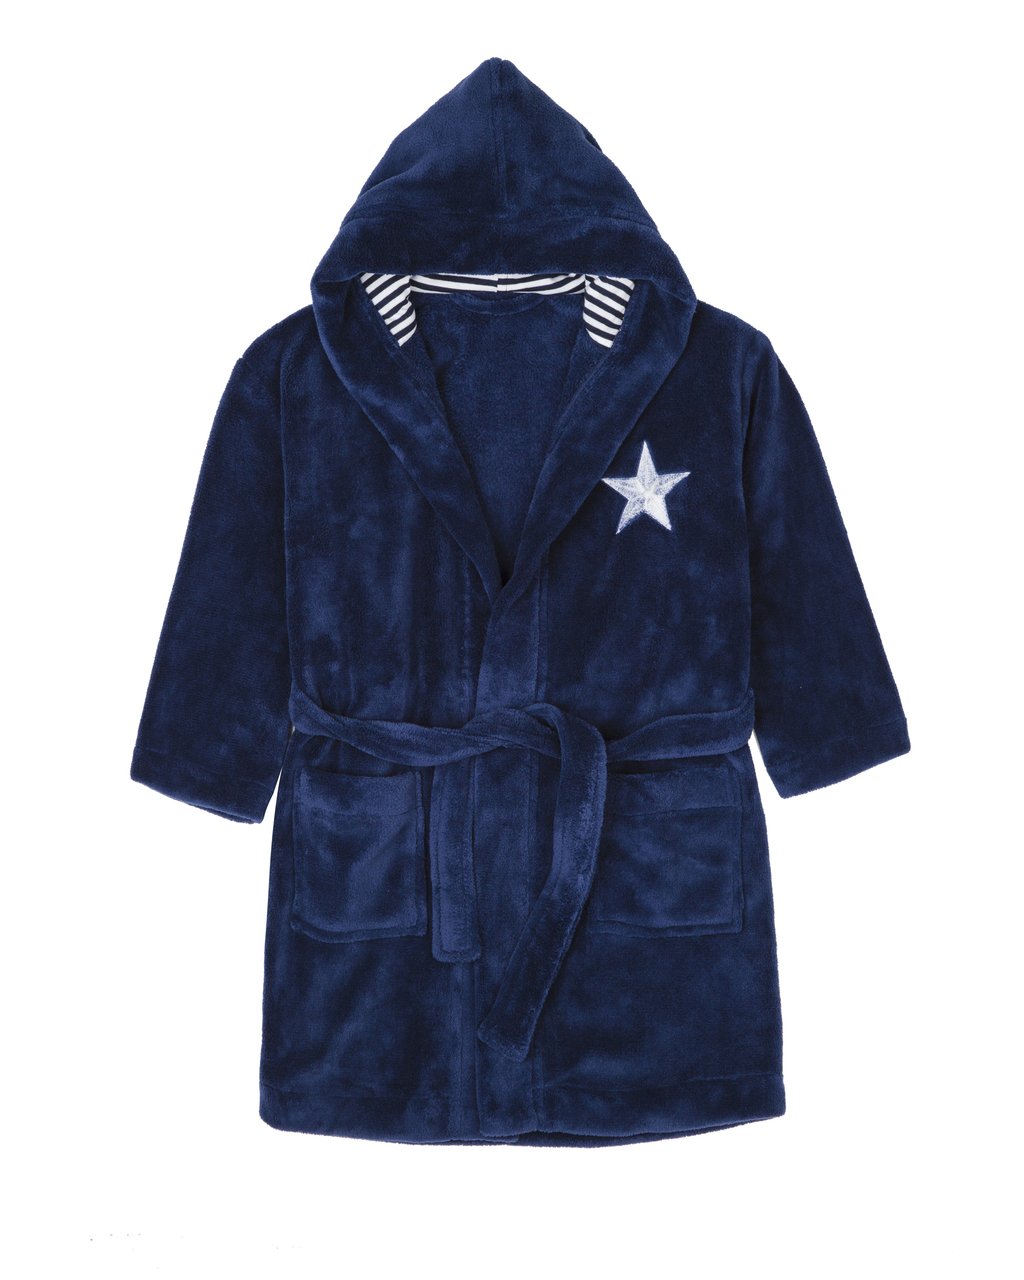 Boys soft micro-fleece winter robe - Navy star